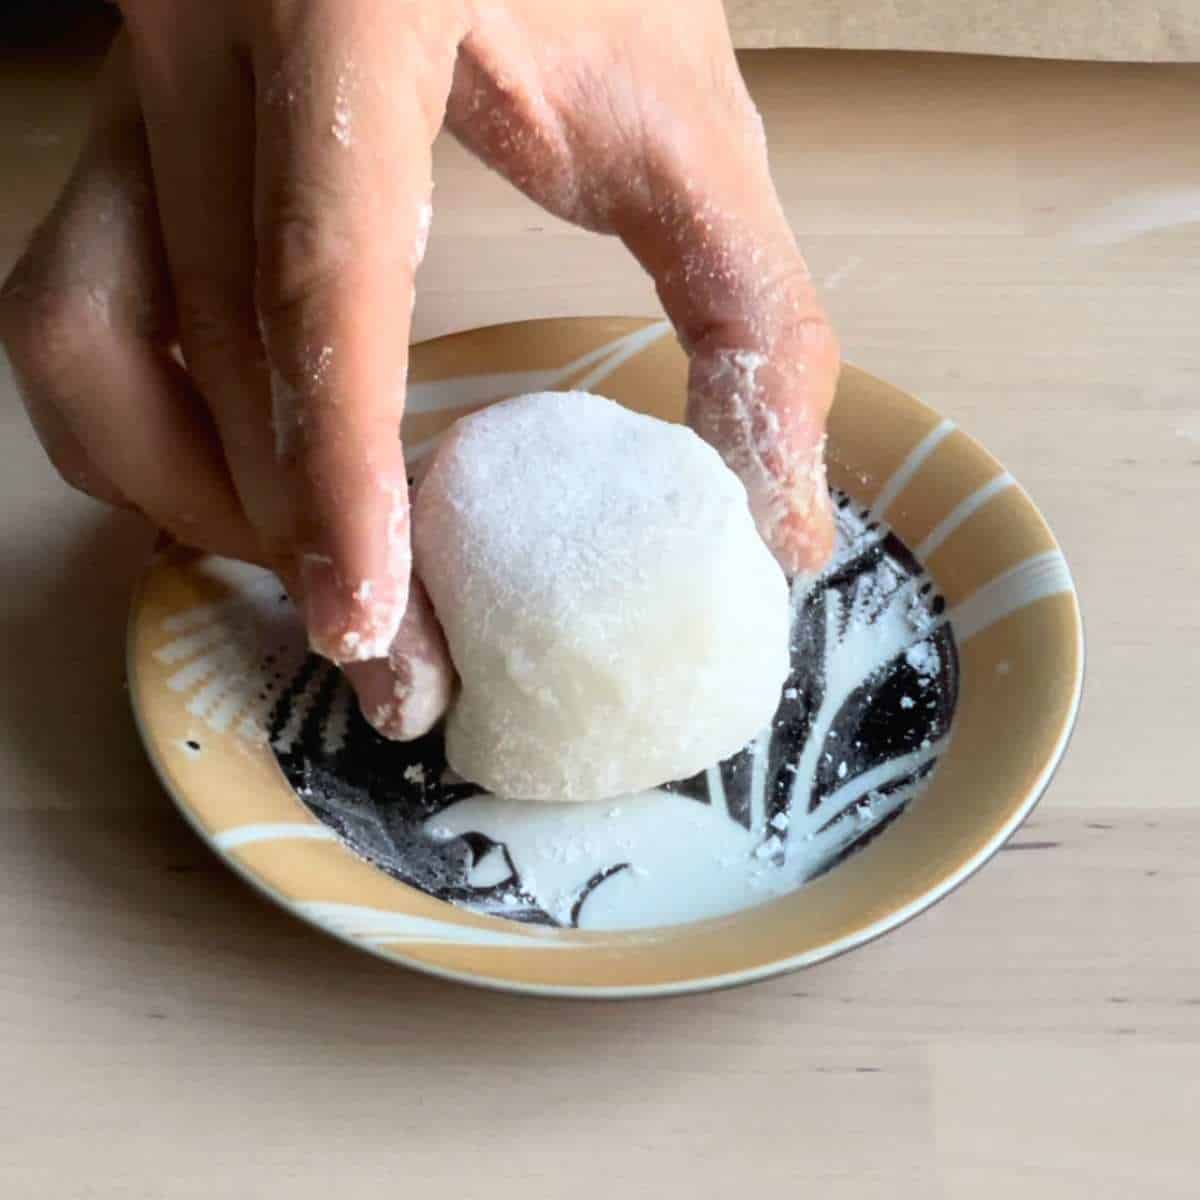 white plain mochi on plate